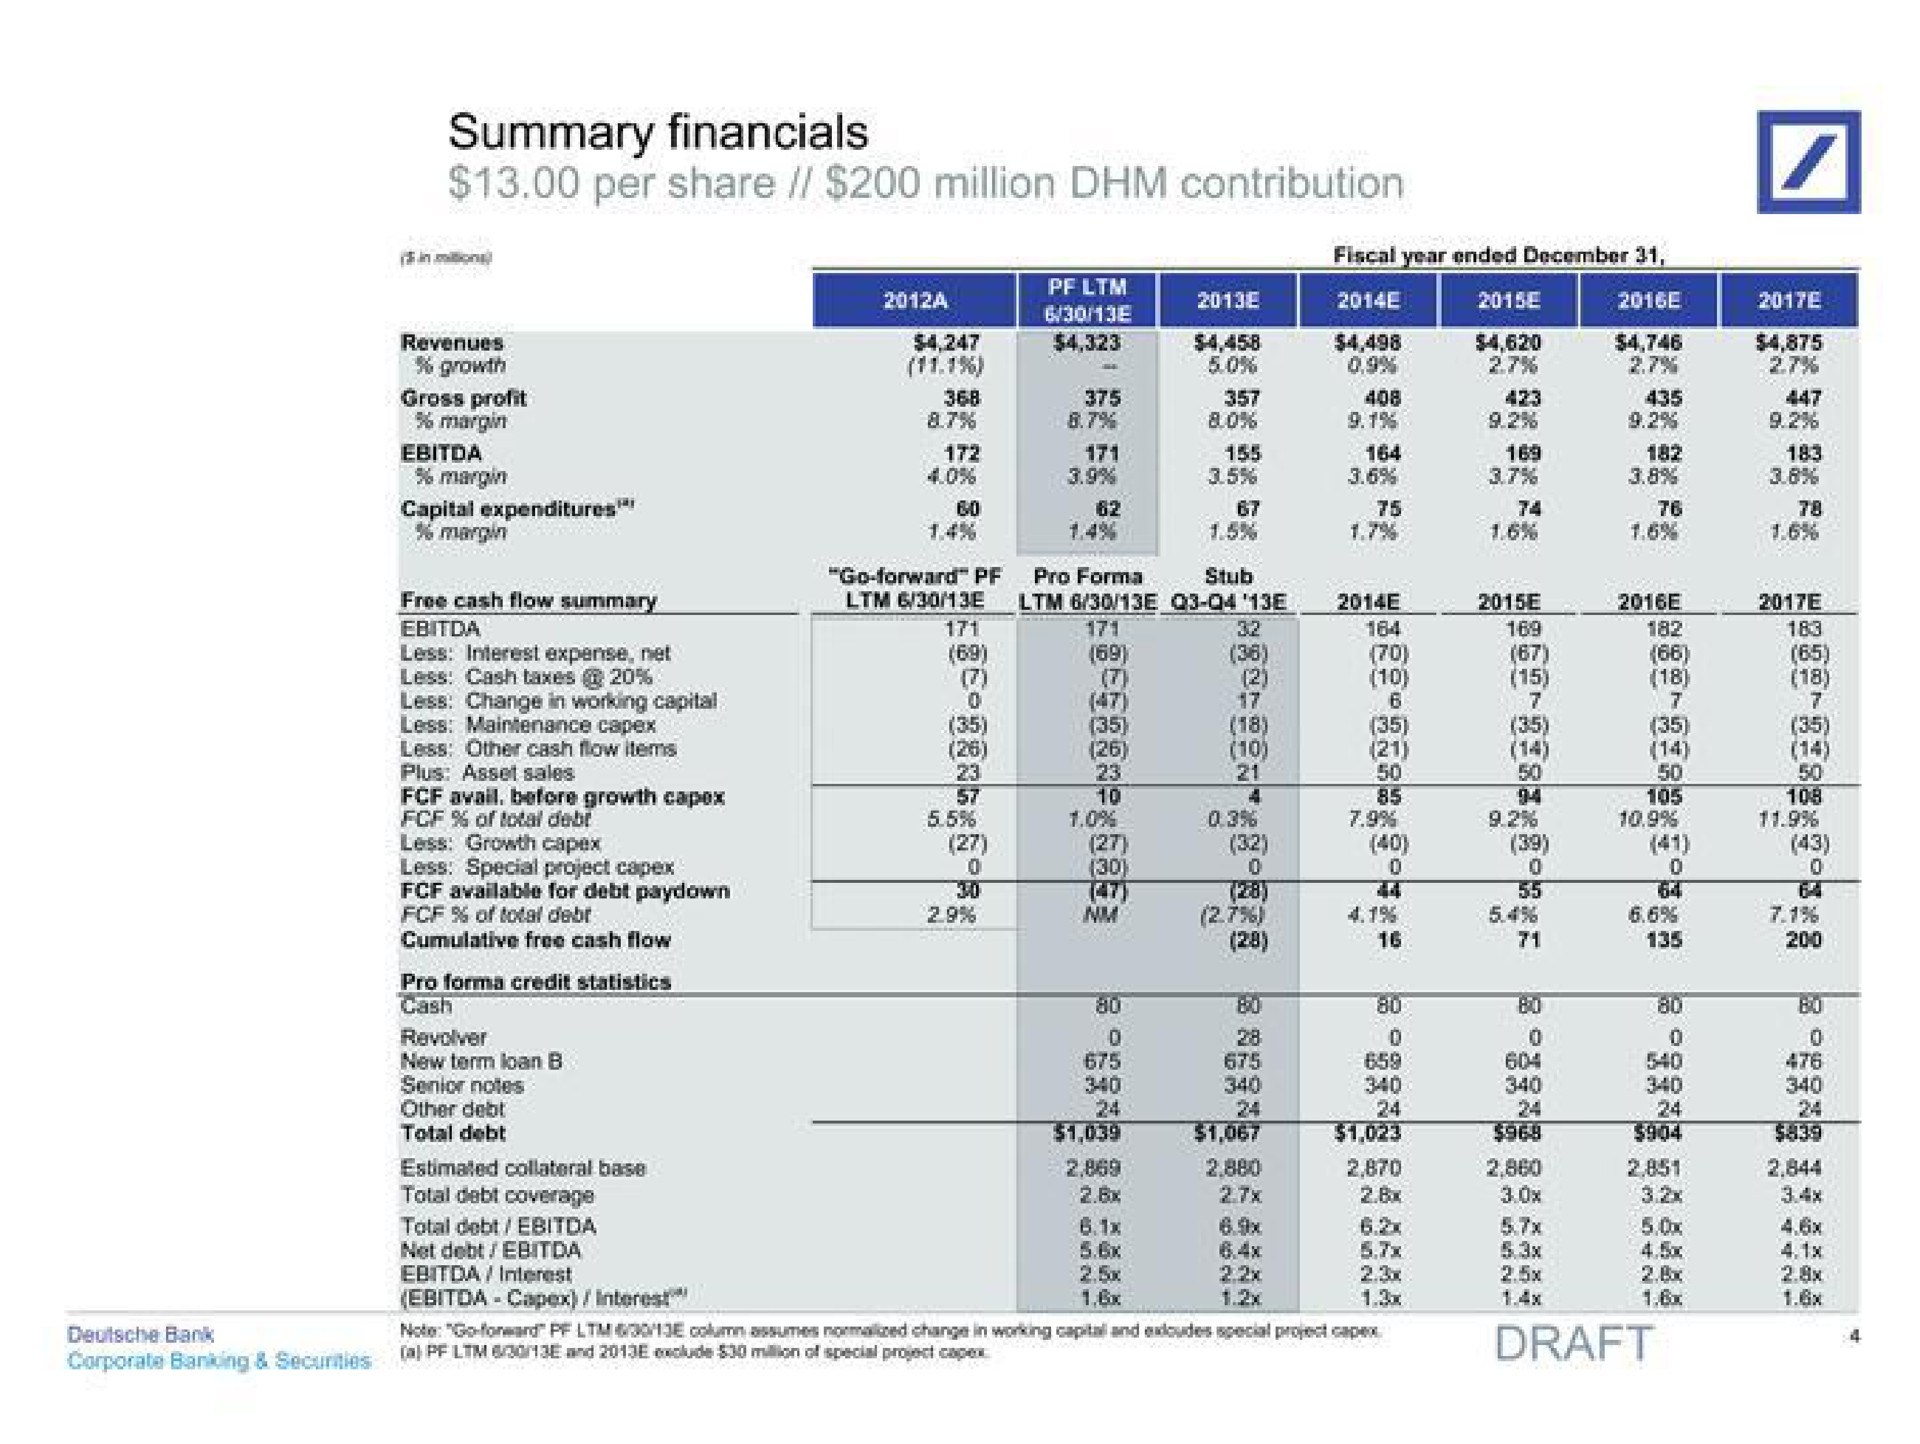 summary per share million contribution | Deutsche Bank